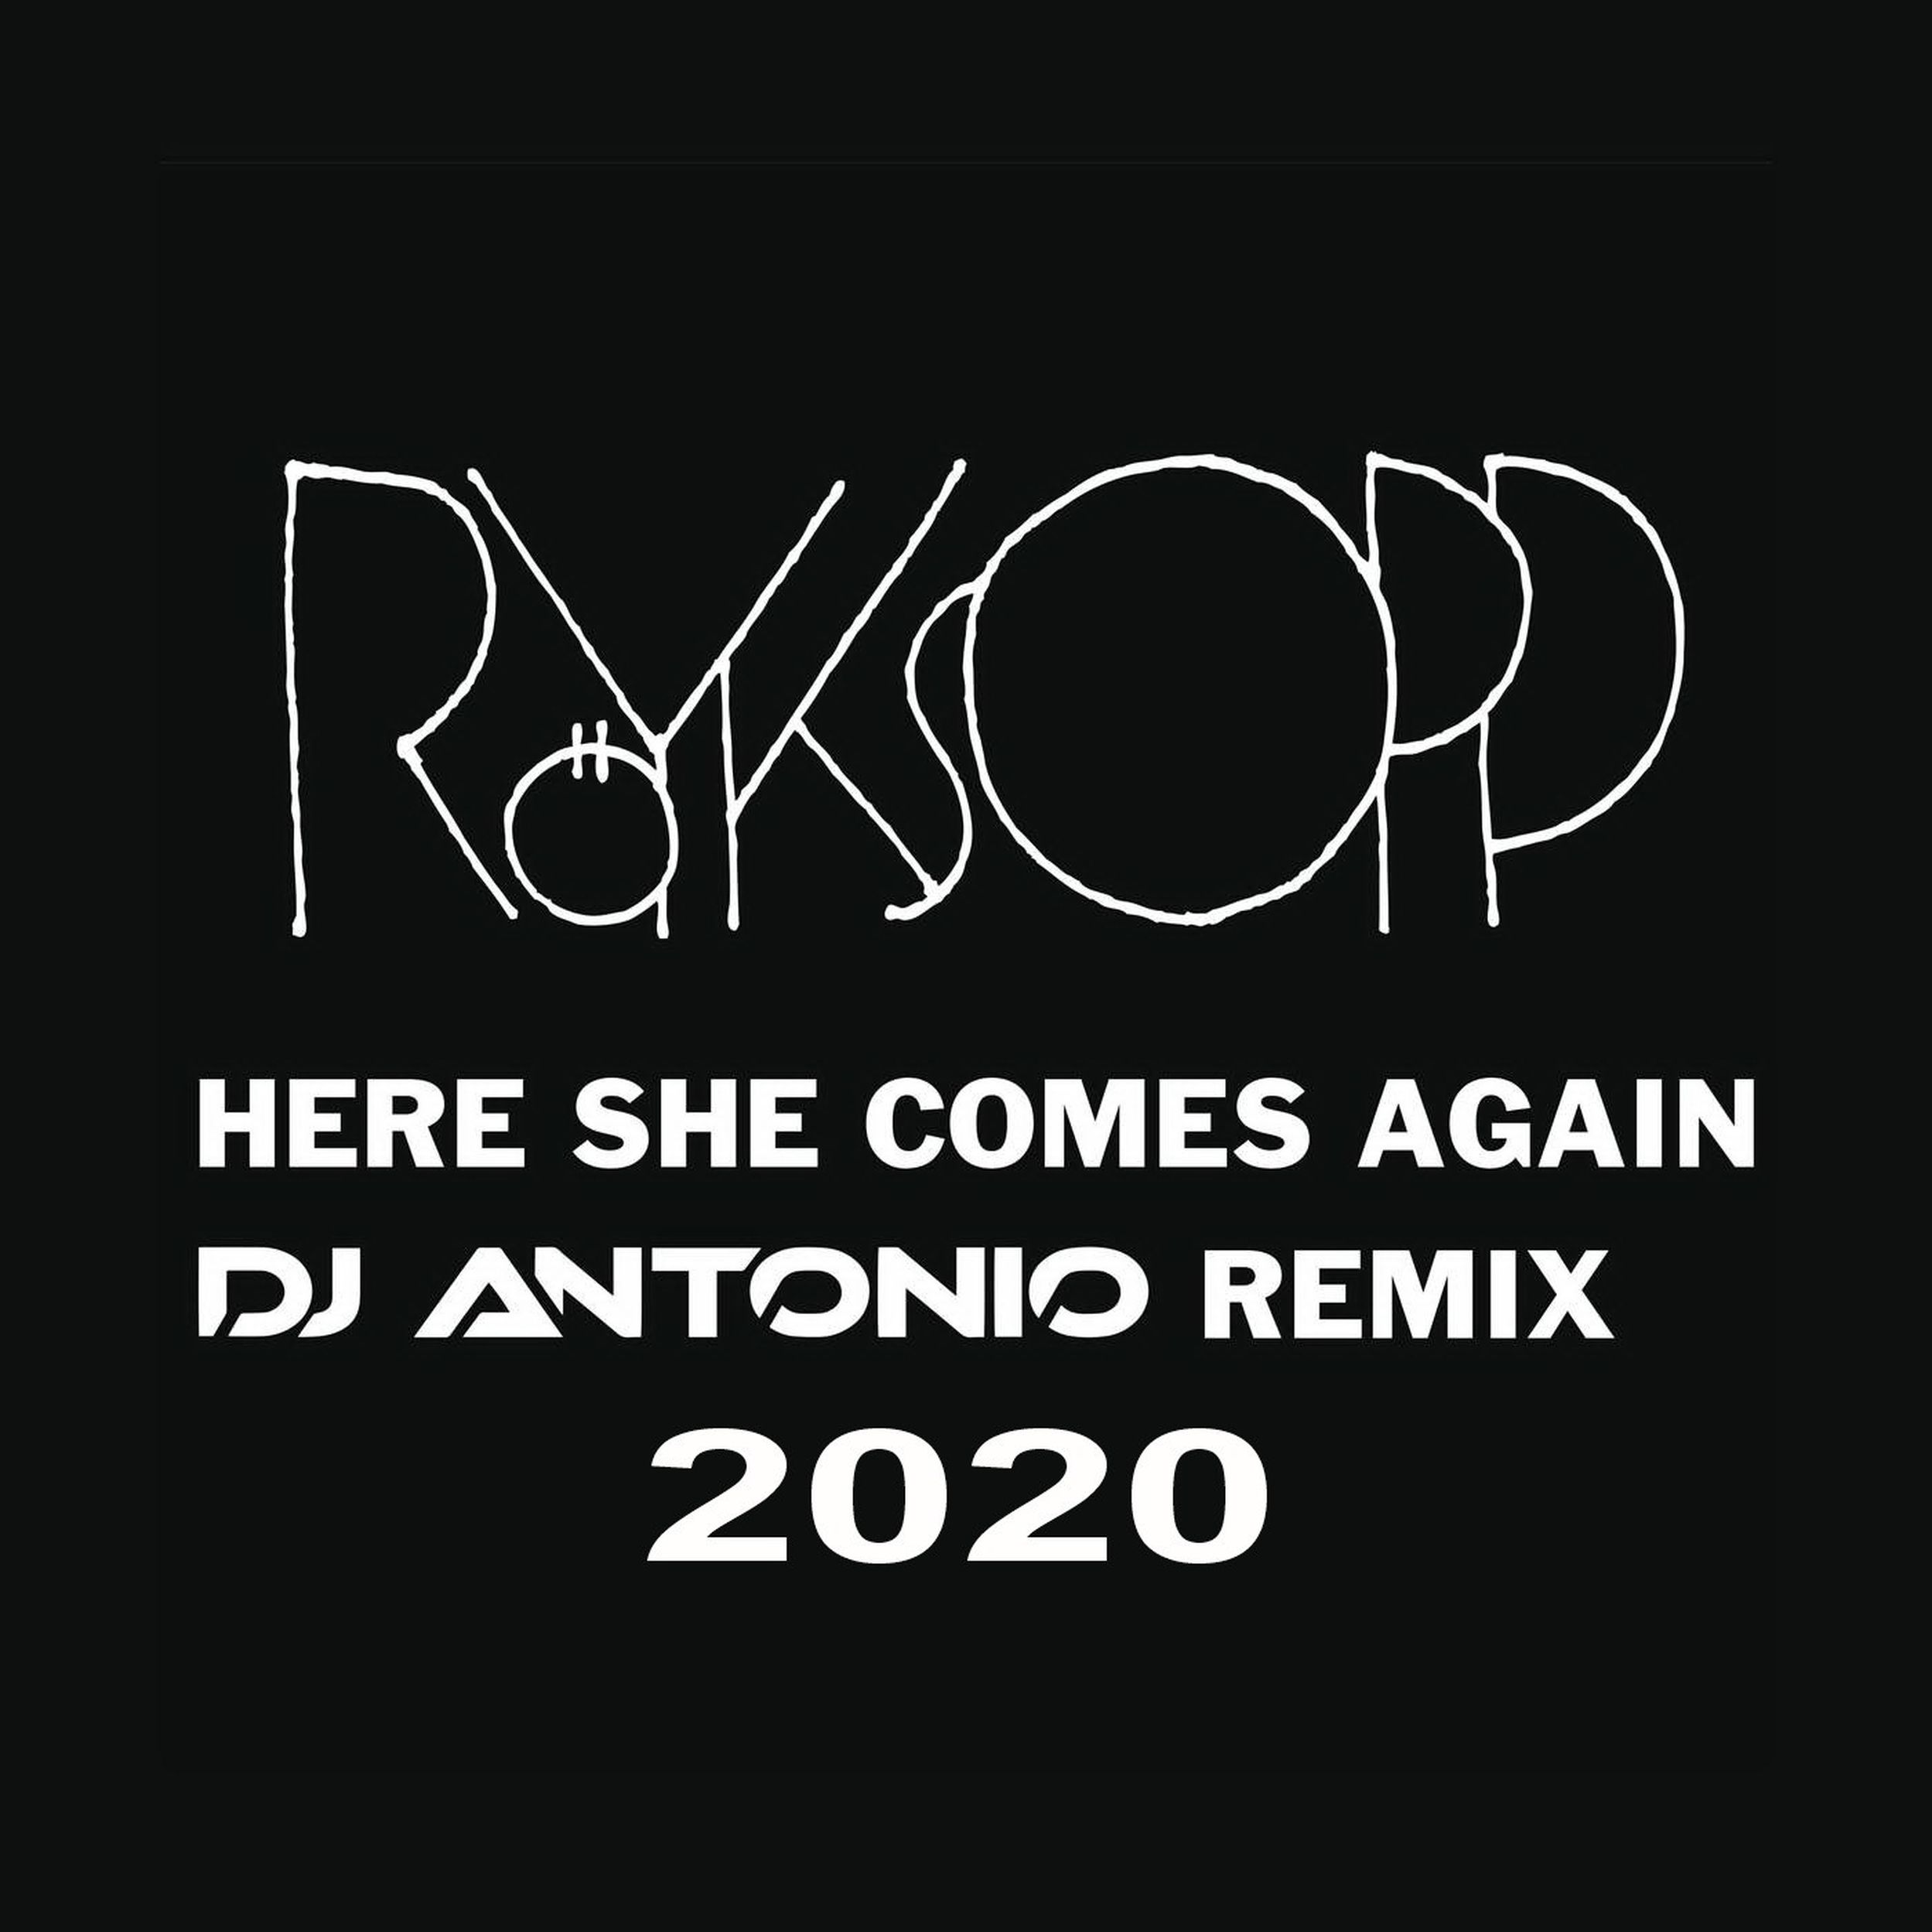 Royksopp here she again mp3. Here she comes again. Here she comes again (DJ Antonio Remix). Royksopp here she comes again. Royksopp here comes again.